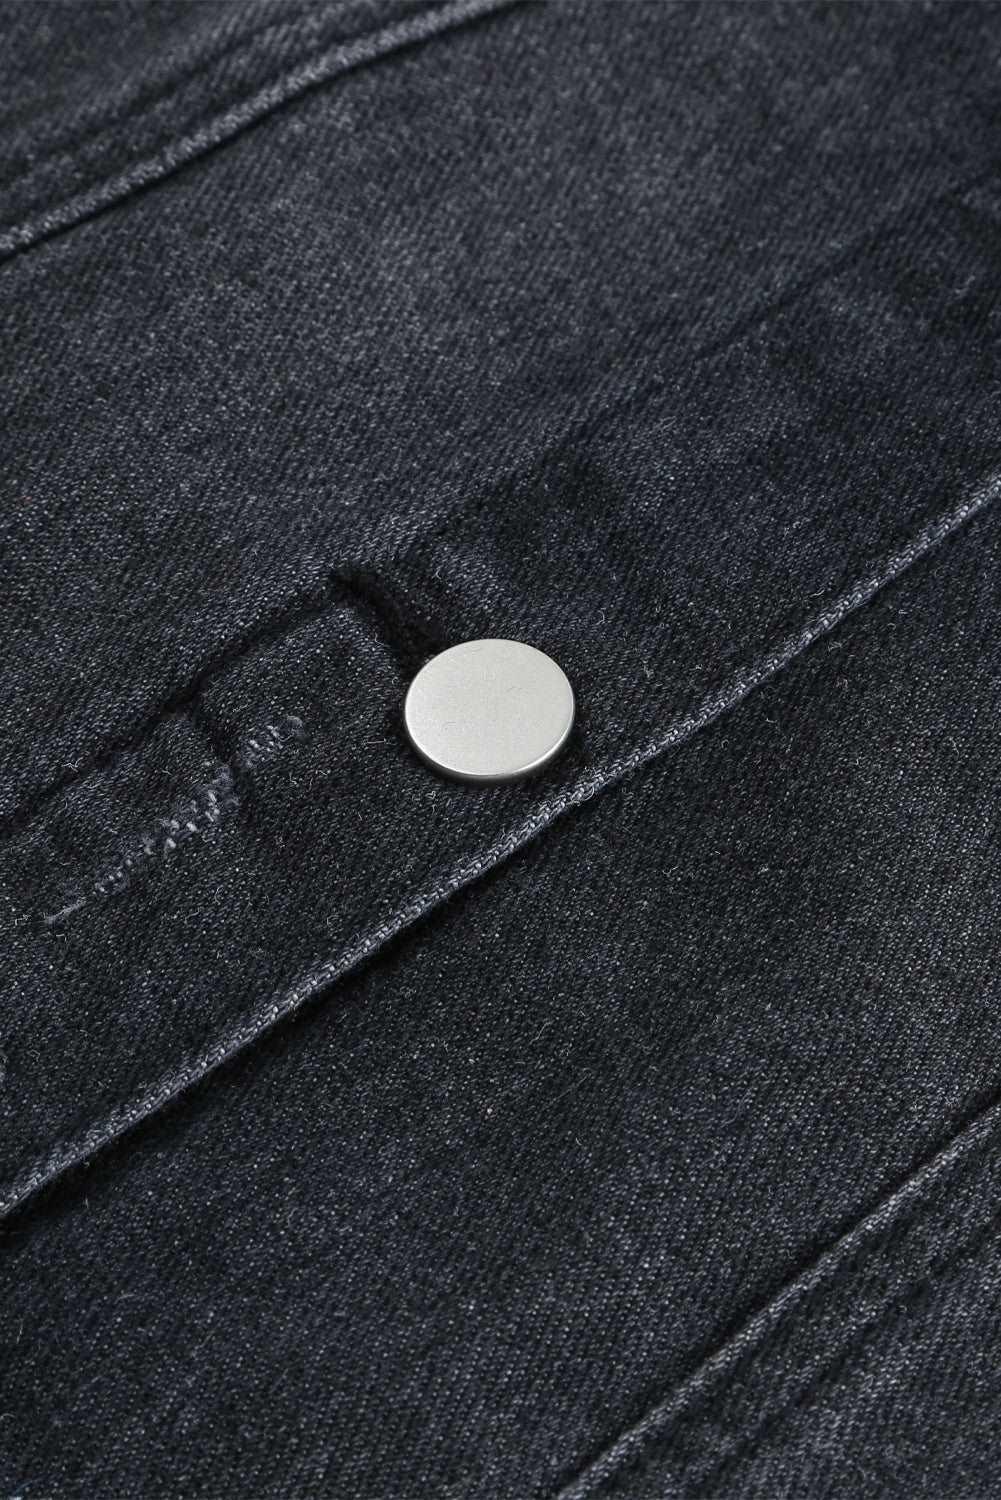 Black Casual Distressed Raw Hem Buttons Denim Jacket - Vesteeto